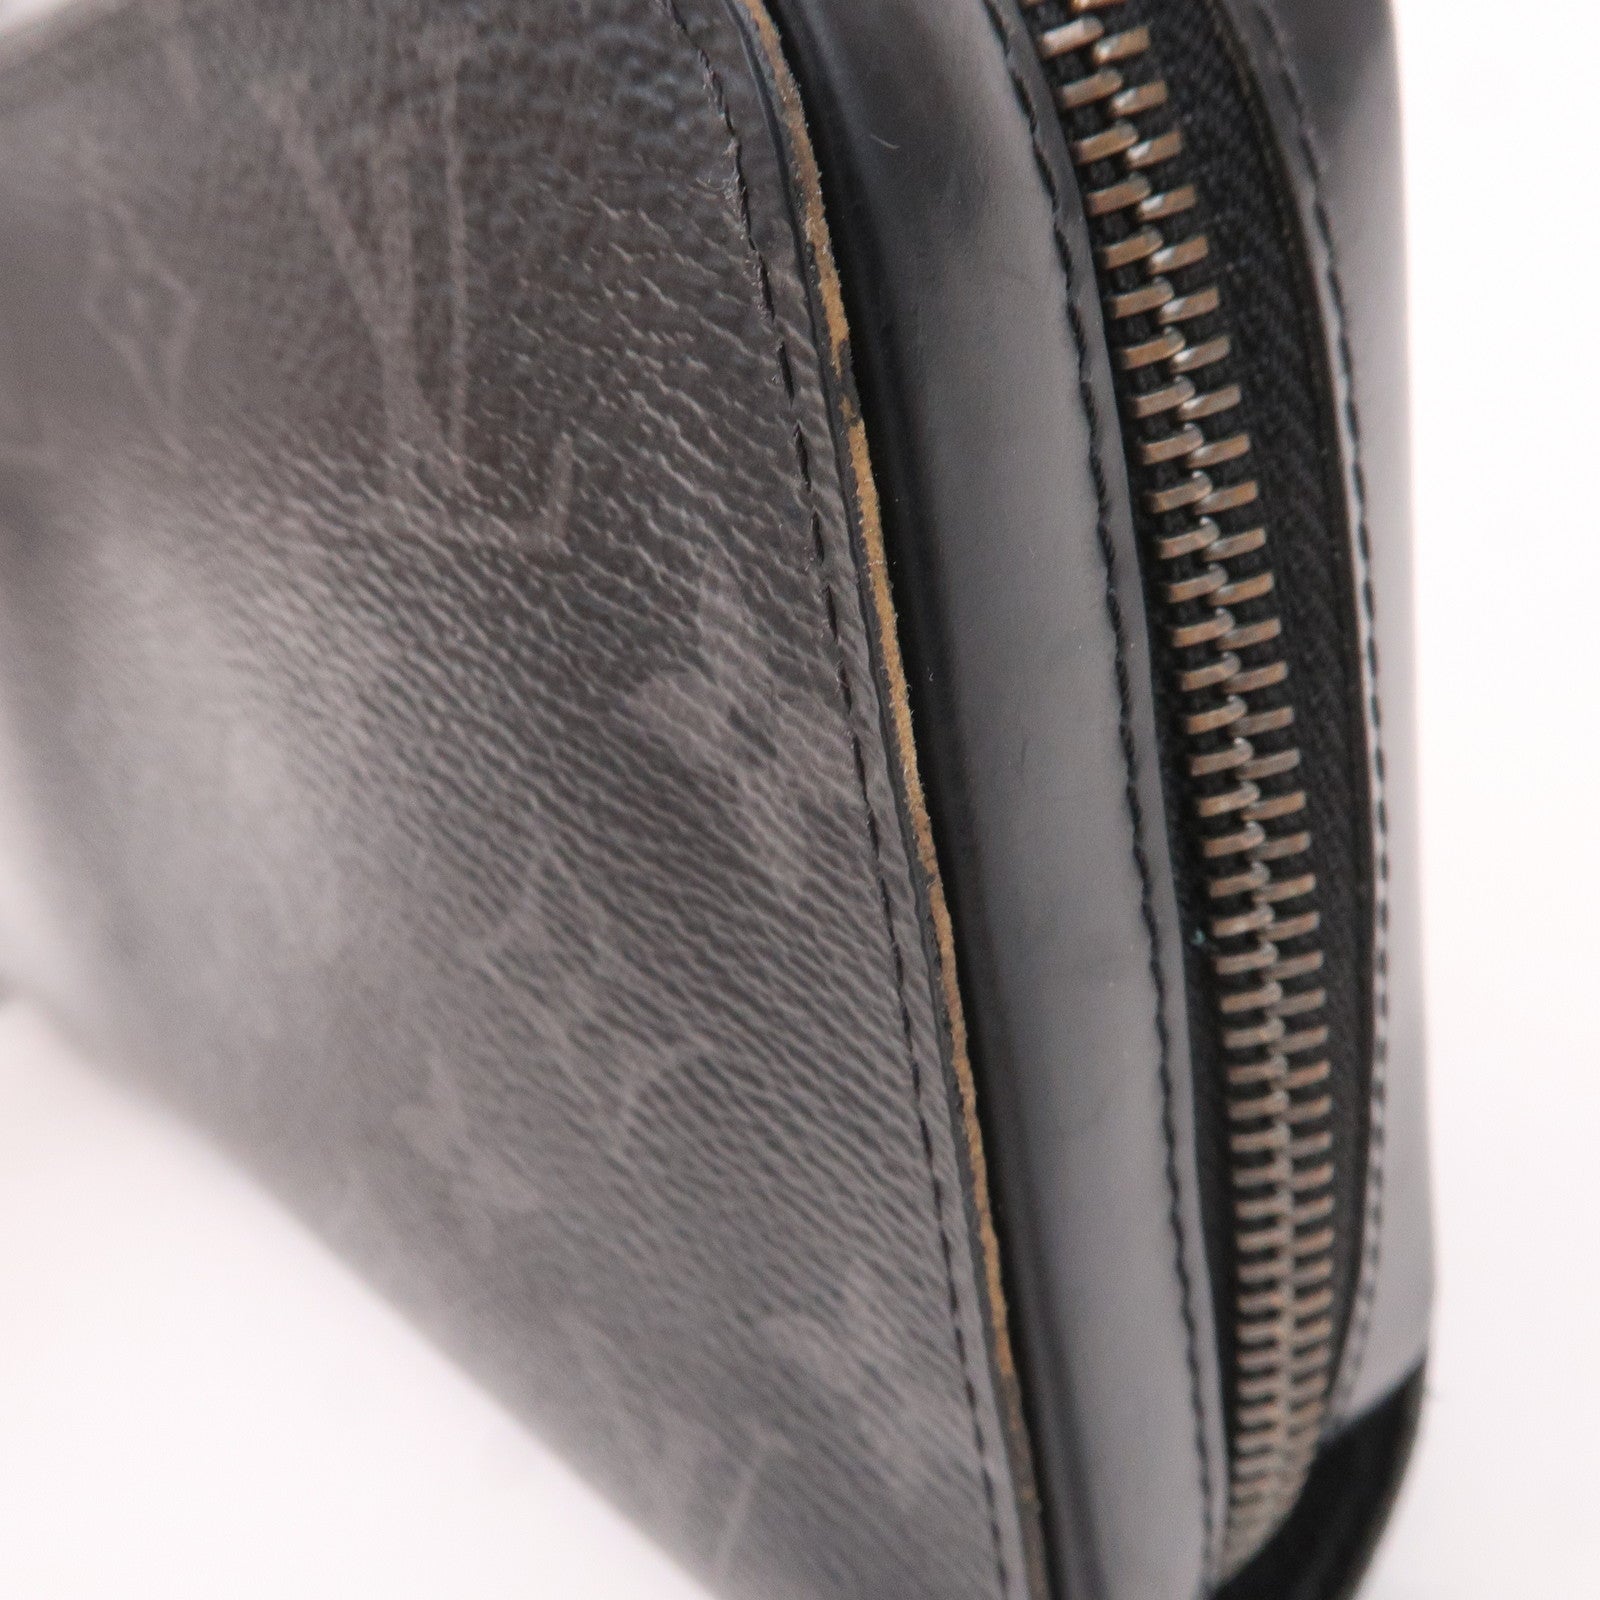 Shop Louis Vuitton ZIPPY WALLET Zippy Xl Wallet (M61698) by Sincerity_m639